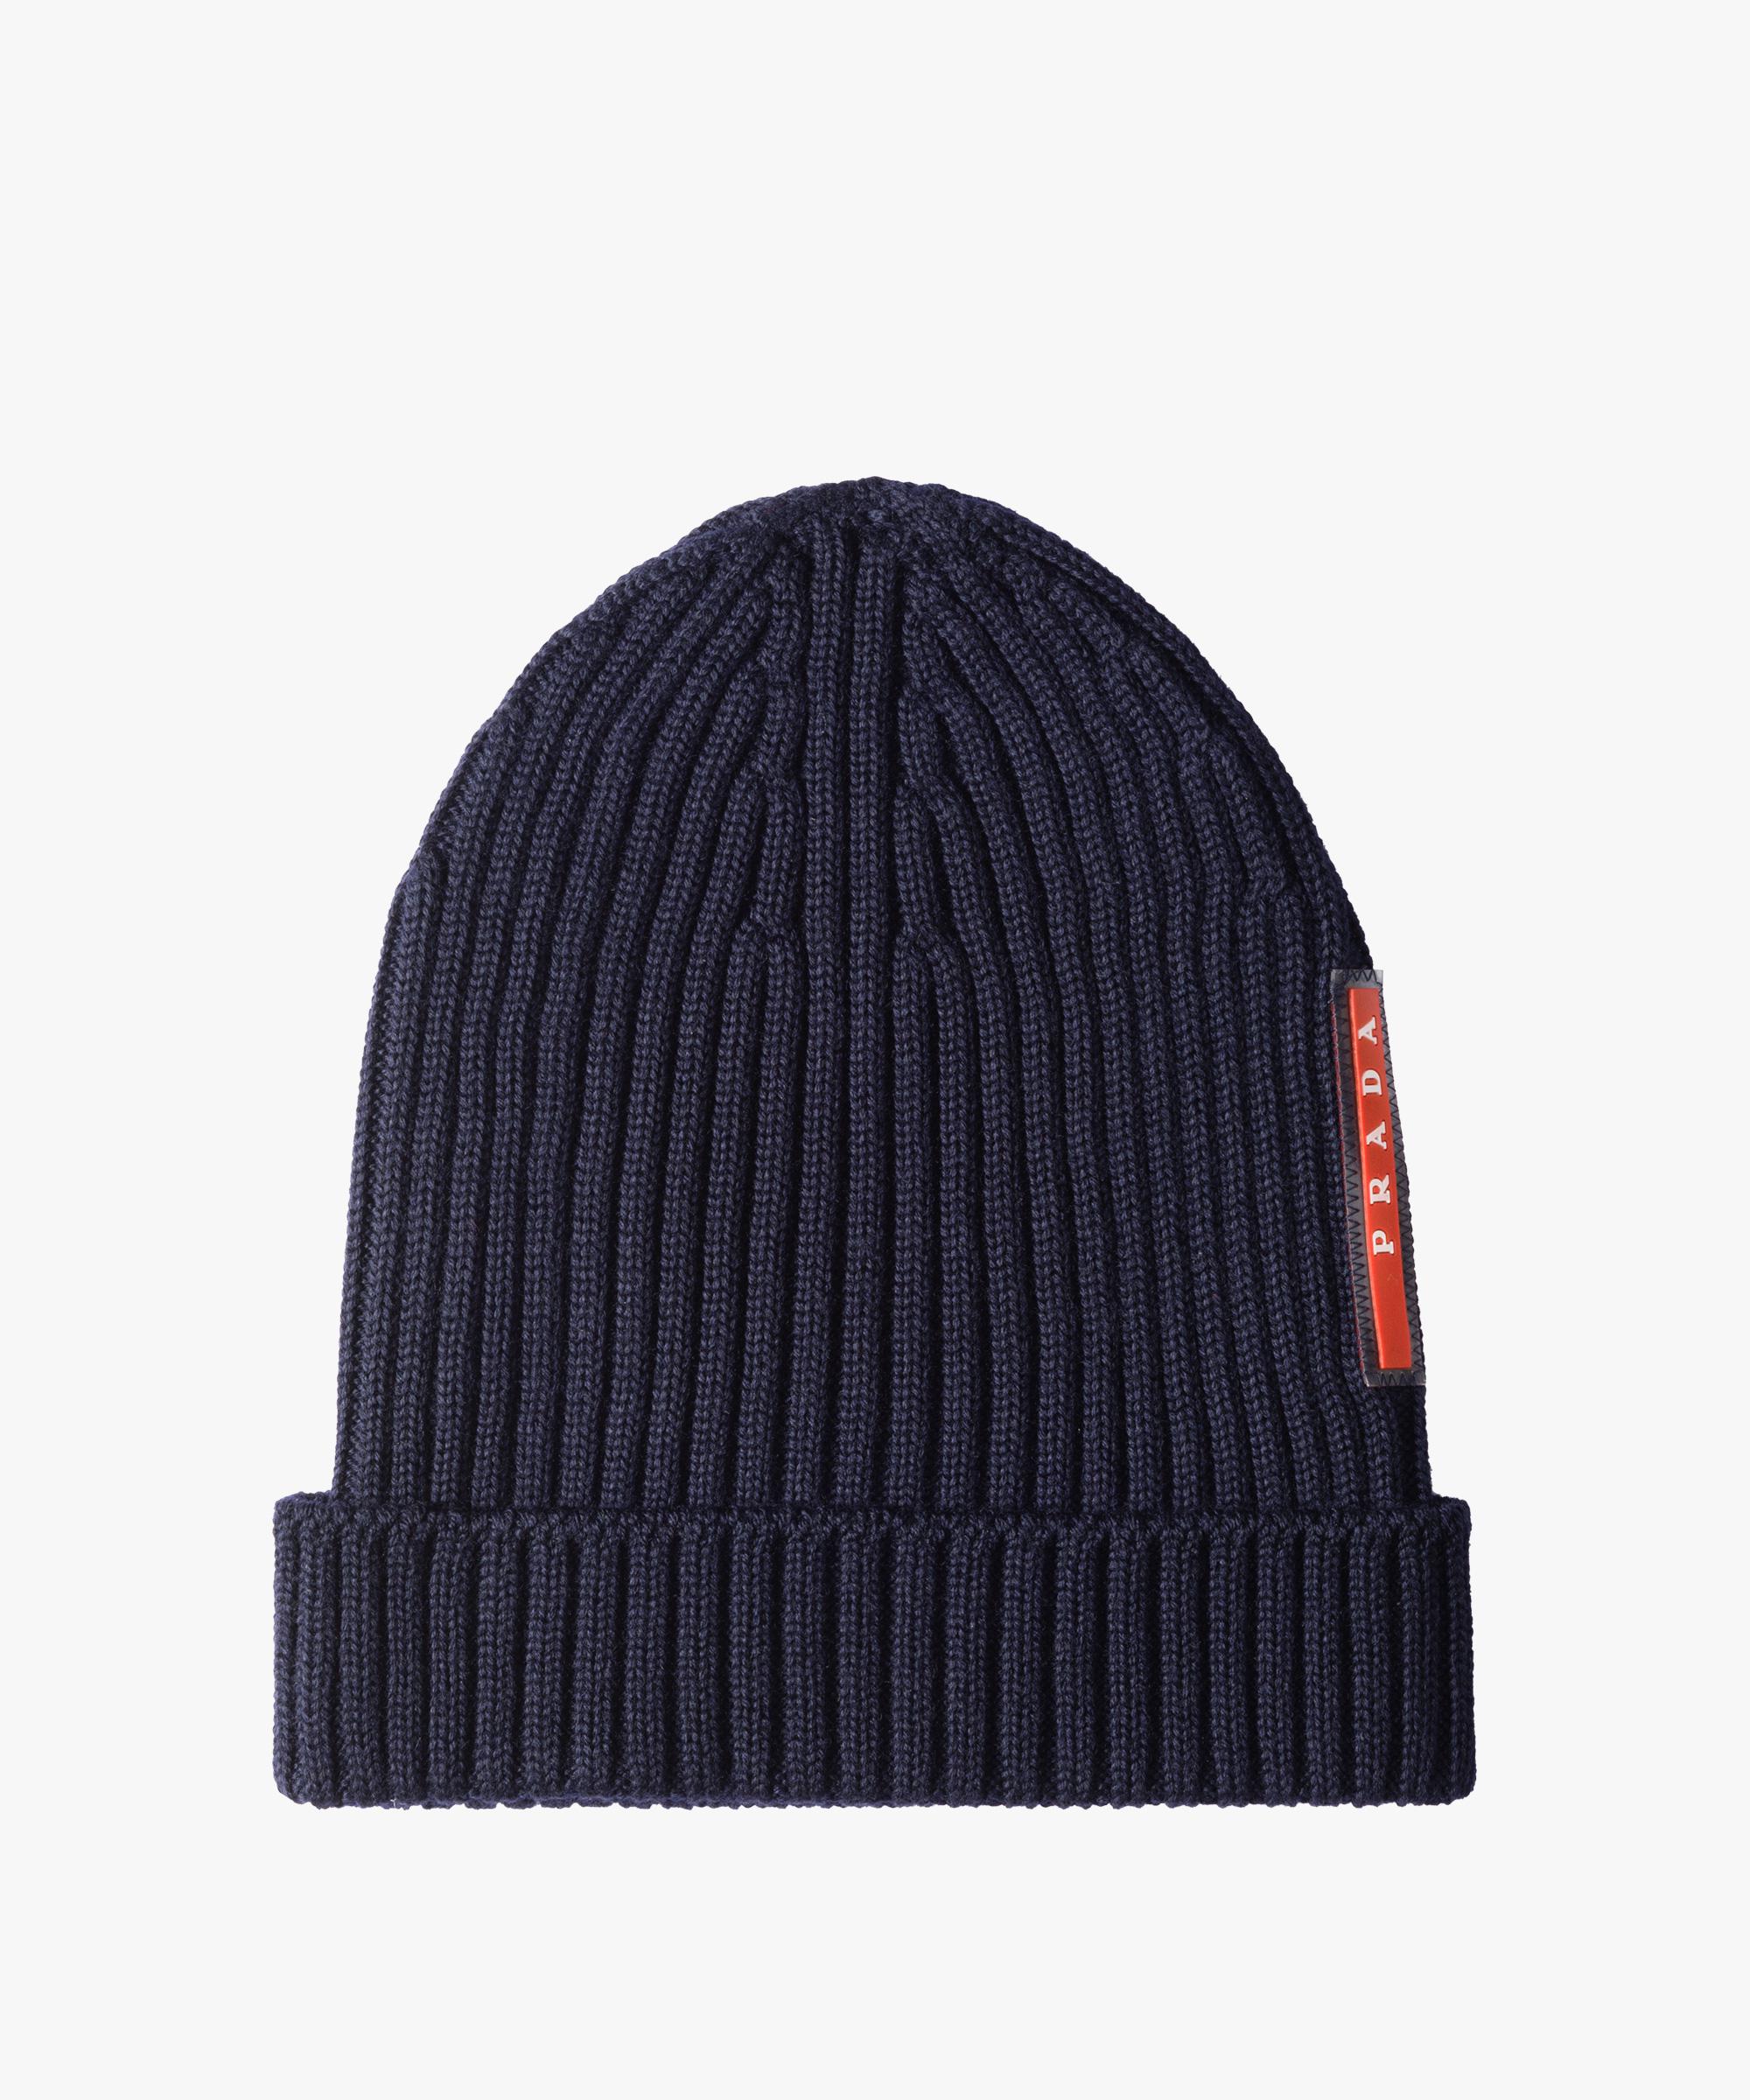 Lyst - Prada Ribbed Wool Hat in Blue for Men